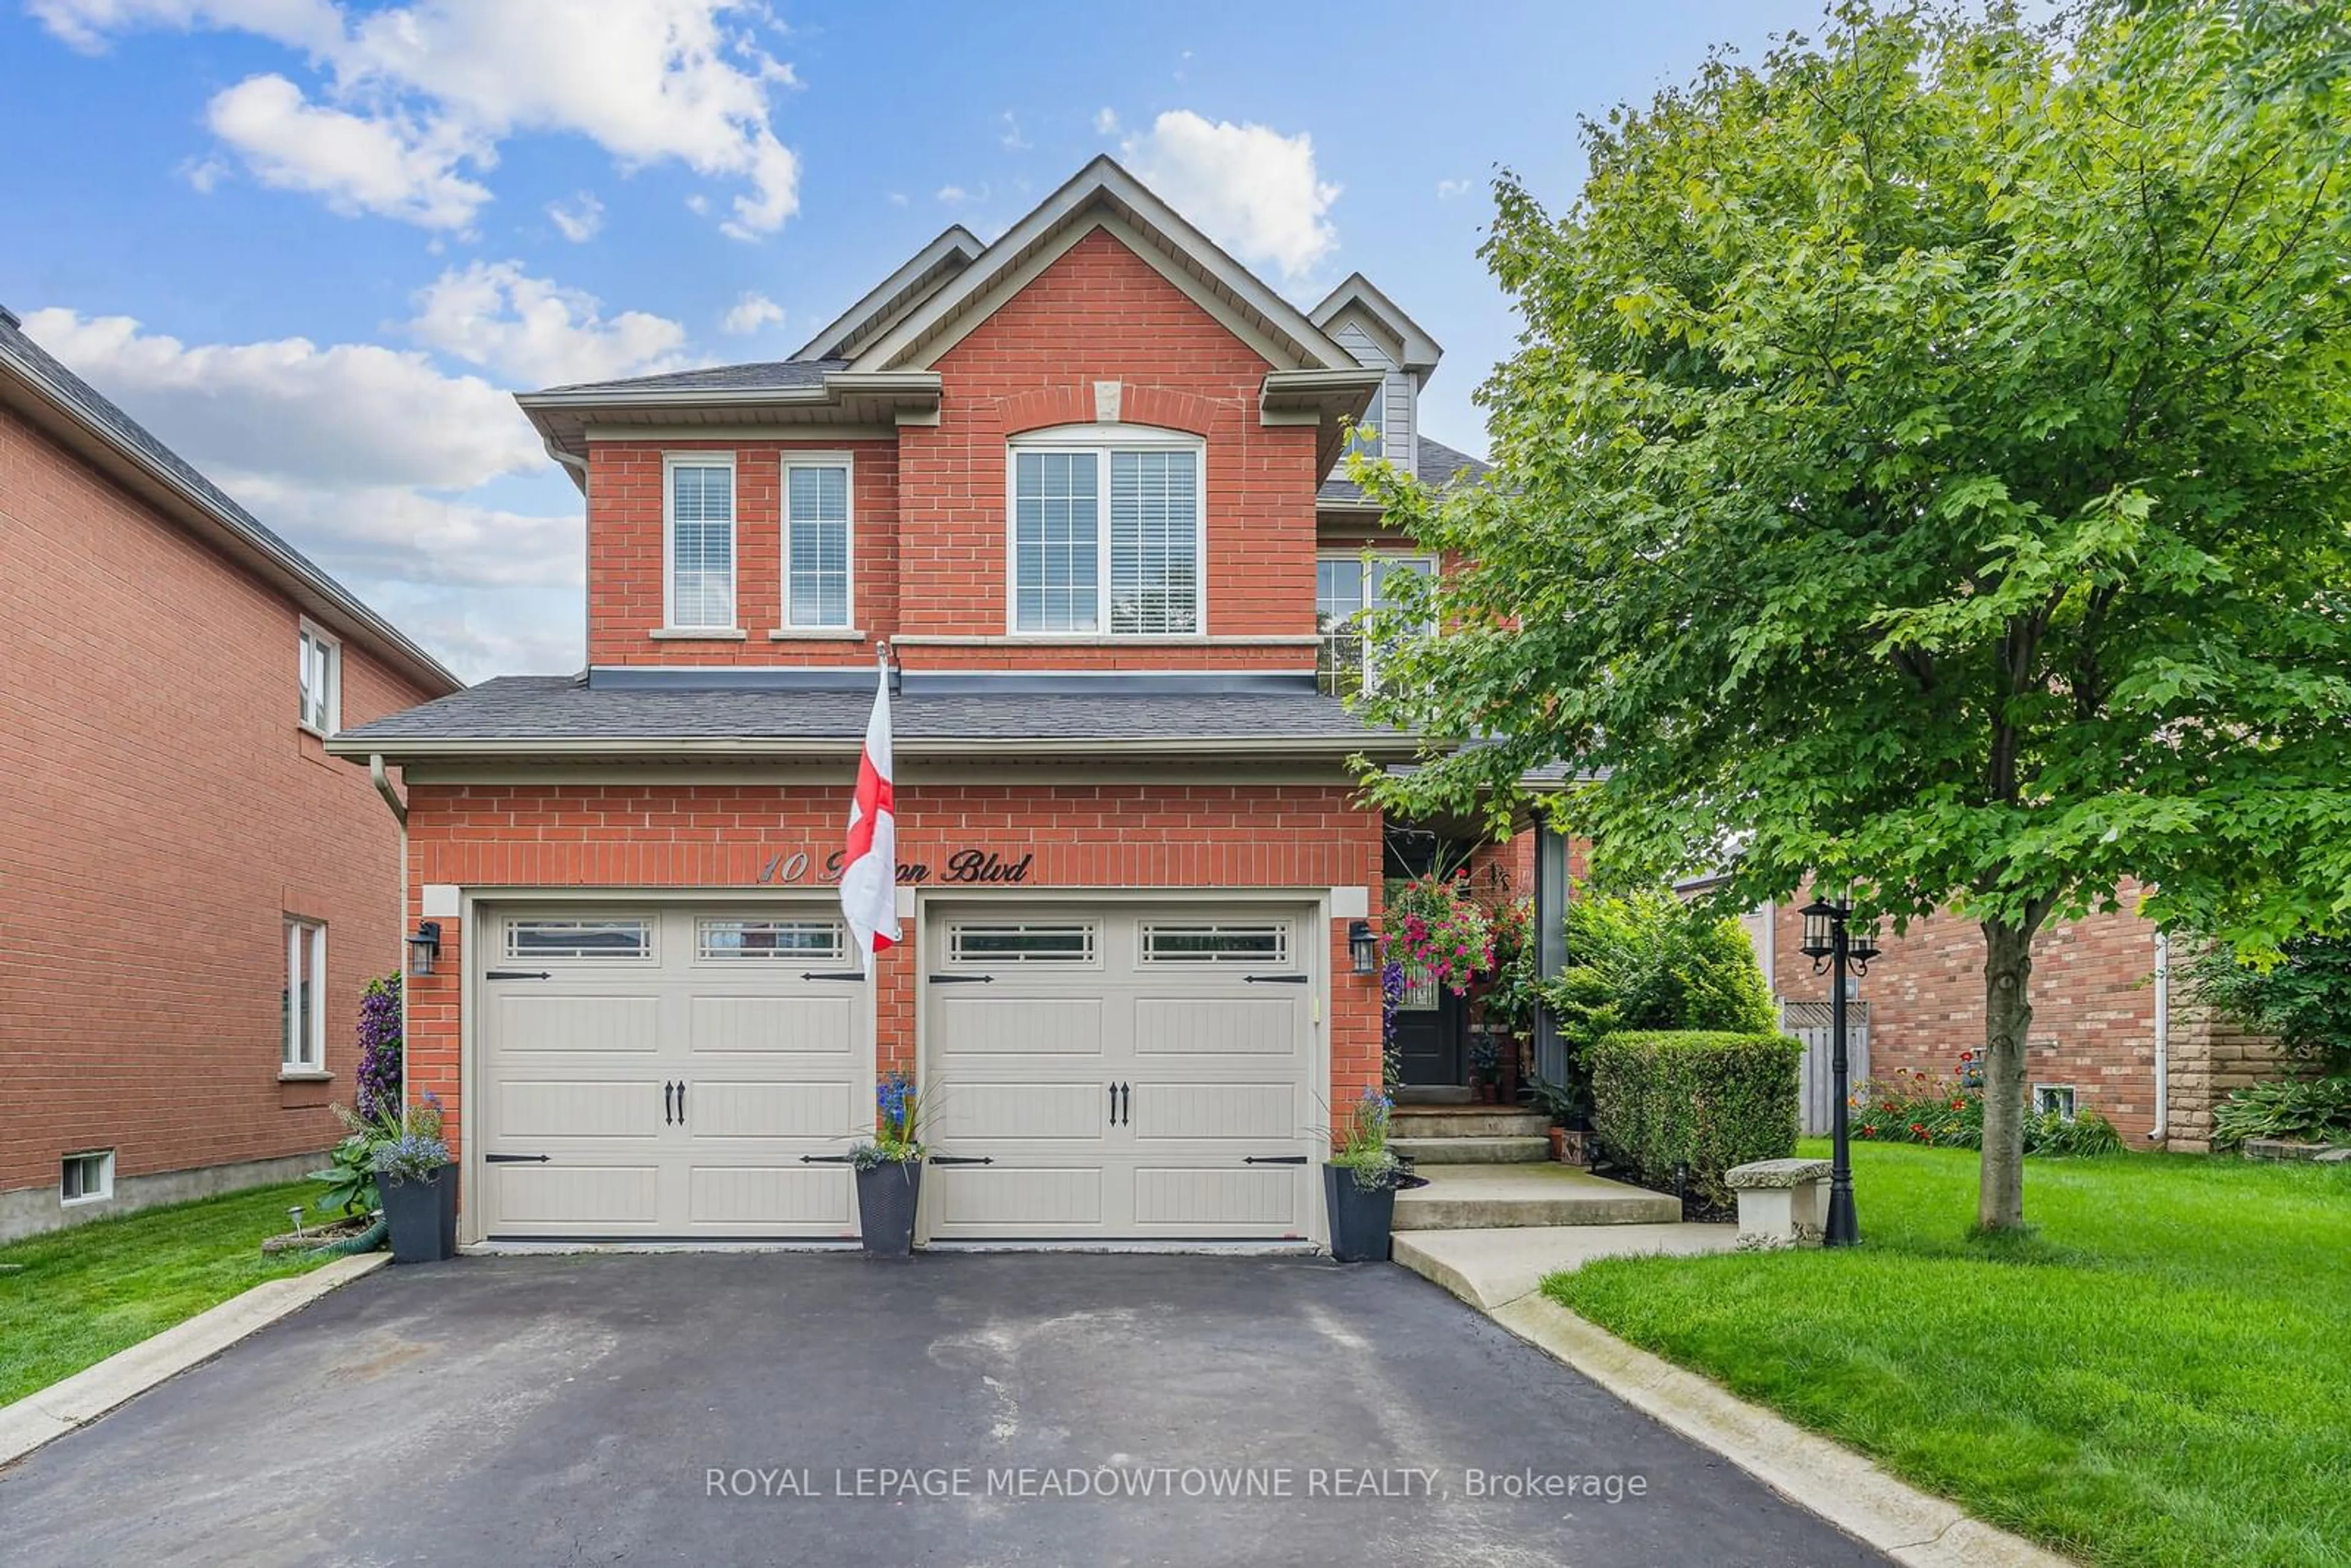 Home with brick exterior material for 10 Berton Blvd, Halton Hills Ontario L7G 6A5